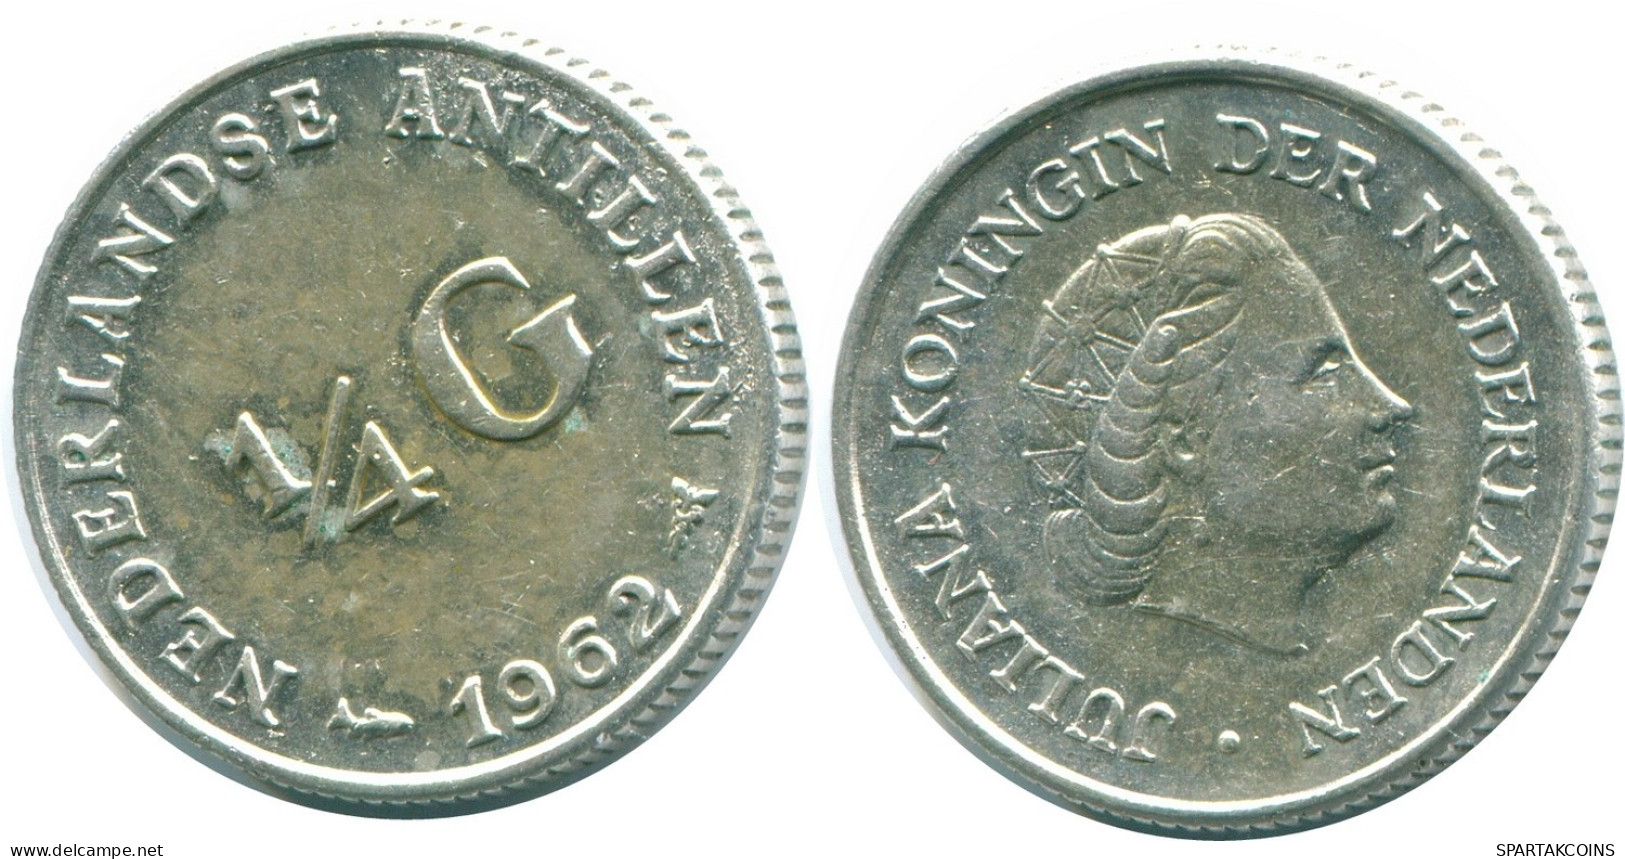 1/4 GULDEN 1962 NETHERLANDS ANTILLES SILVER Colonial Coin #NL11105.4.U.A - Antille Olandesi